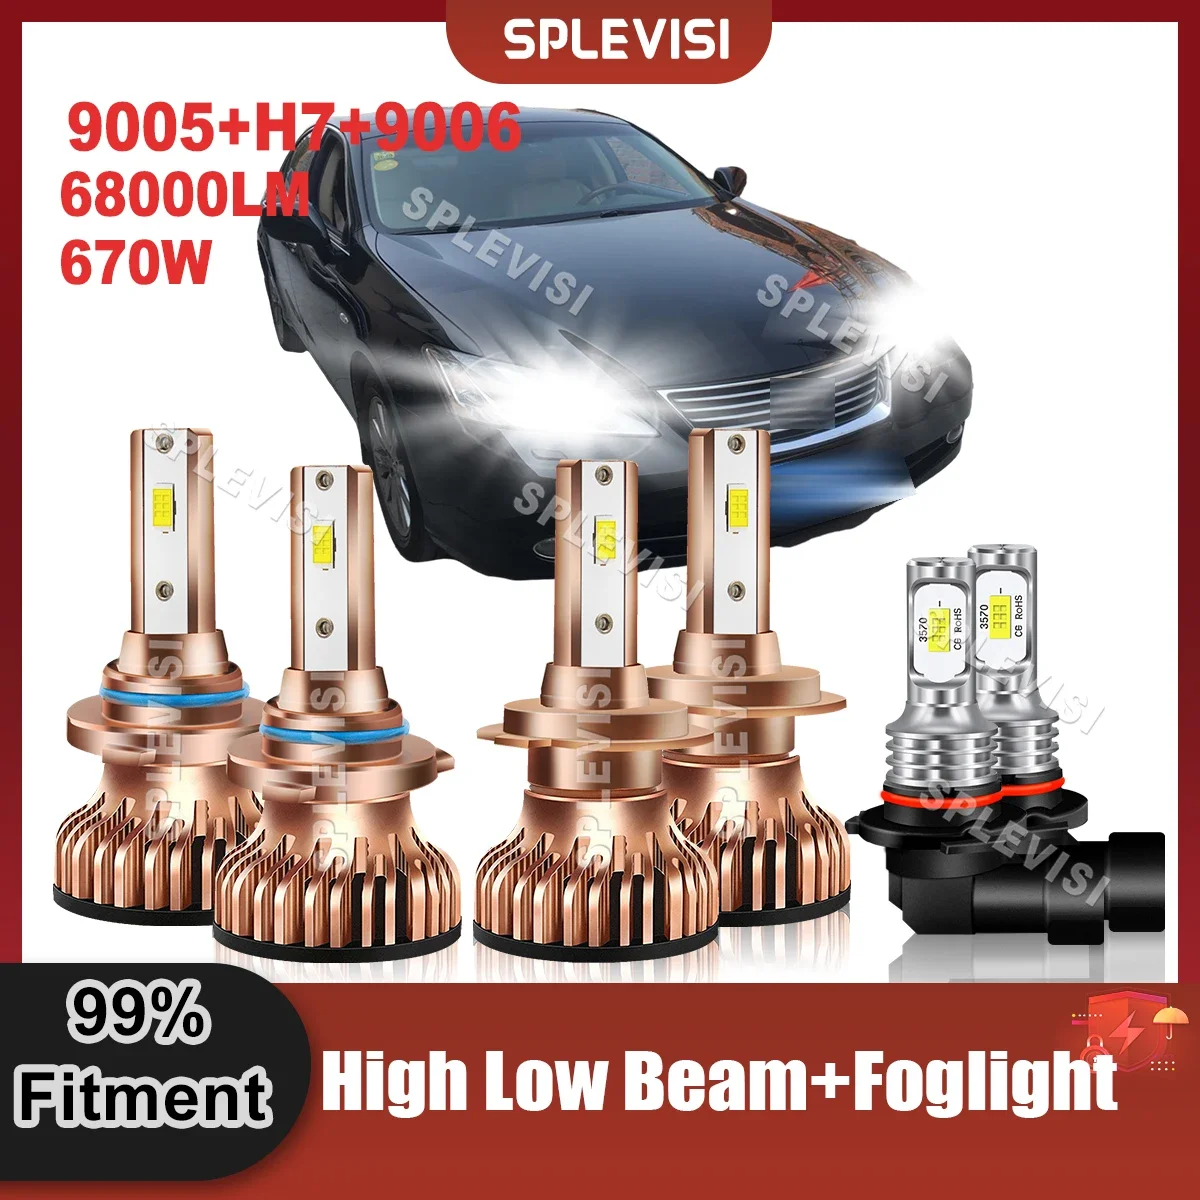 

Replace Car Light Bulbs 9V-24V 300W For Lexus ES350 2007 2008 2009 LED Headlight High Low Beam Foglamp 9005+H7+9006 Pure White